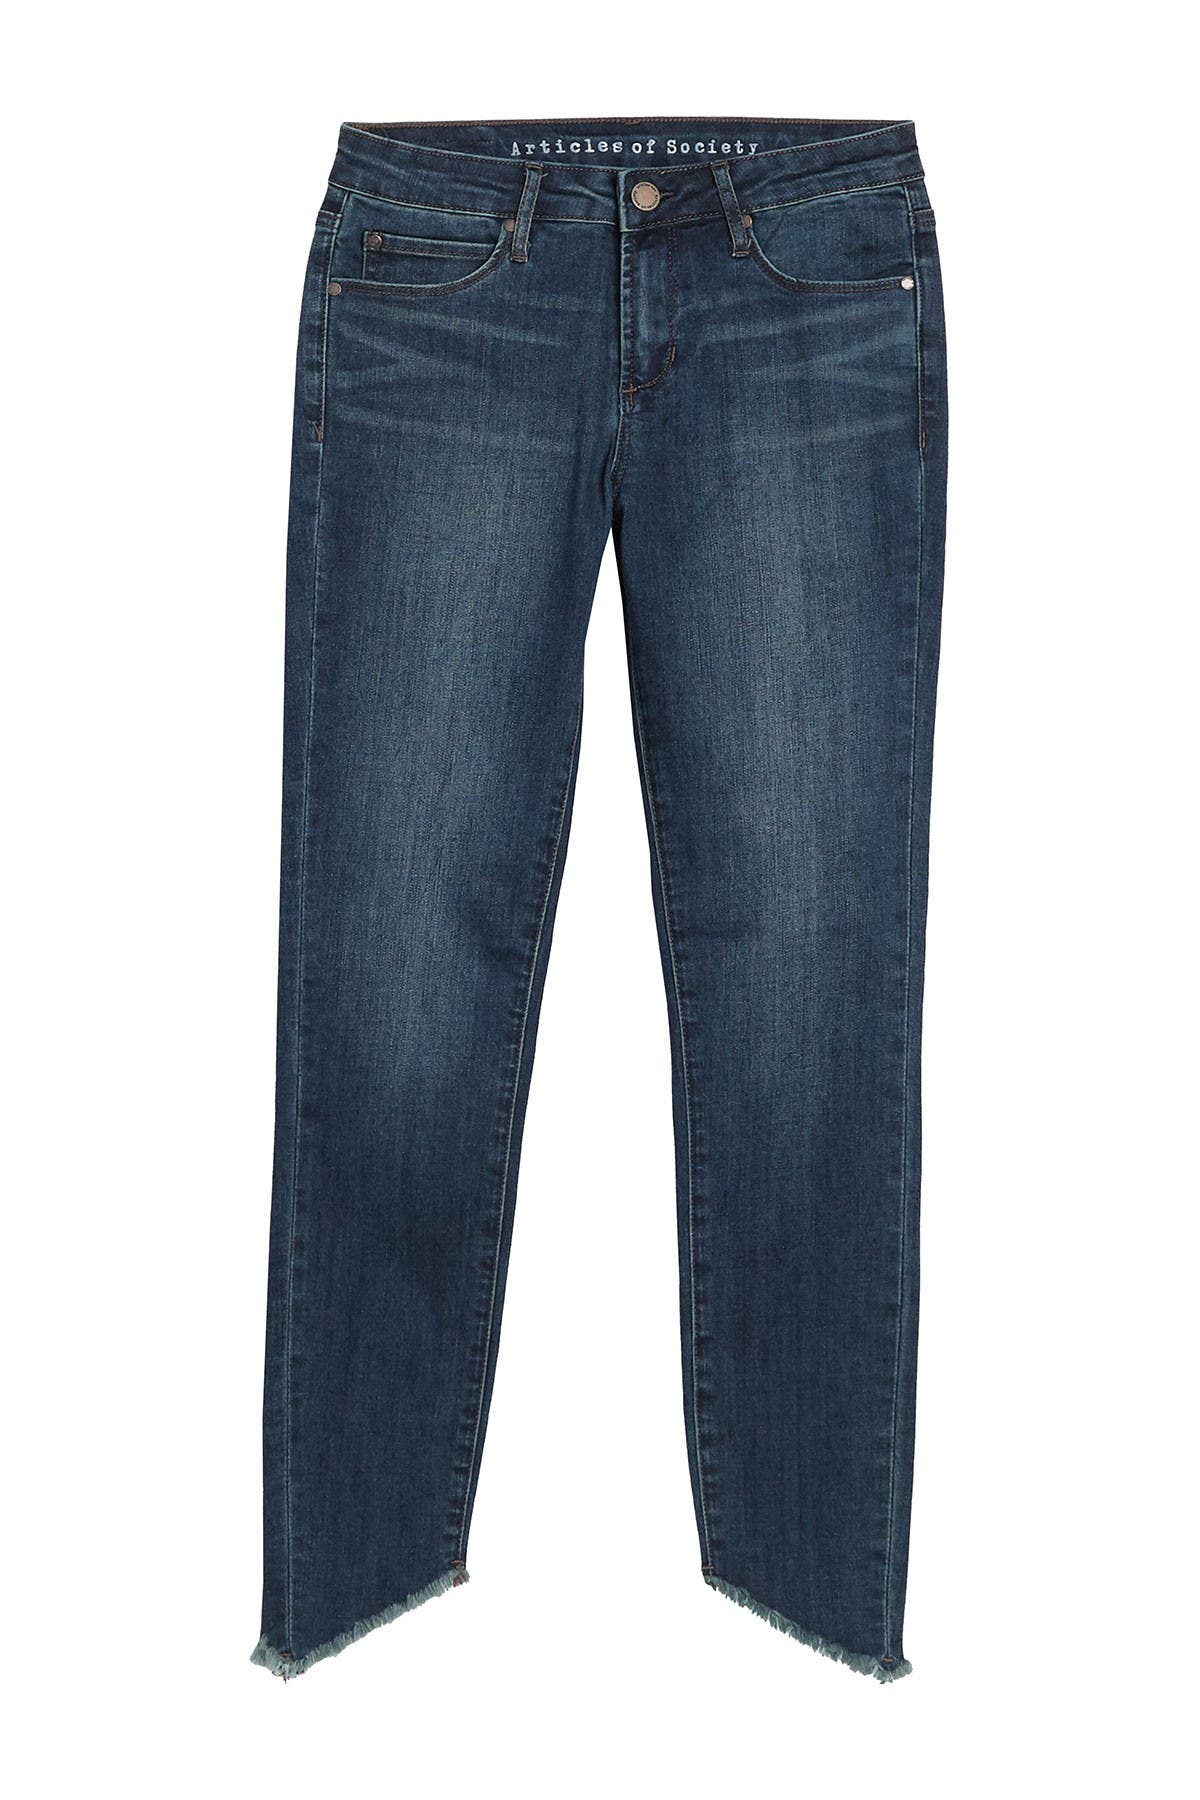 nordstrom rack cropped jeans